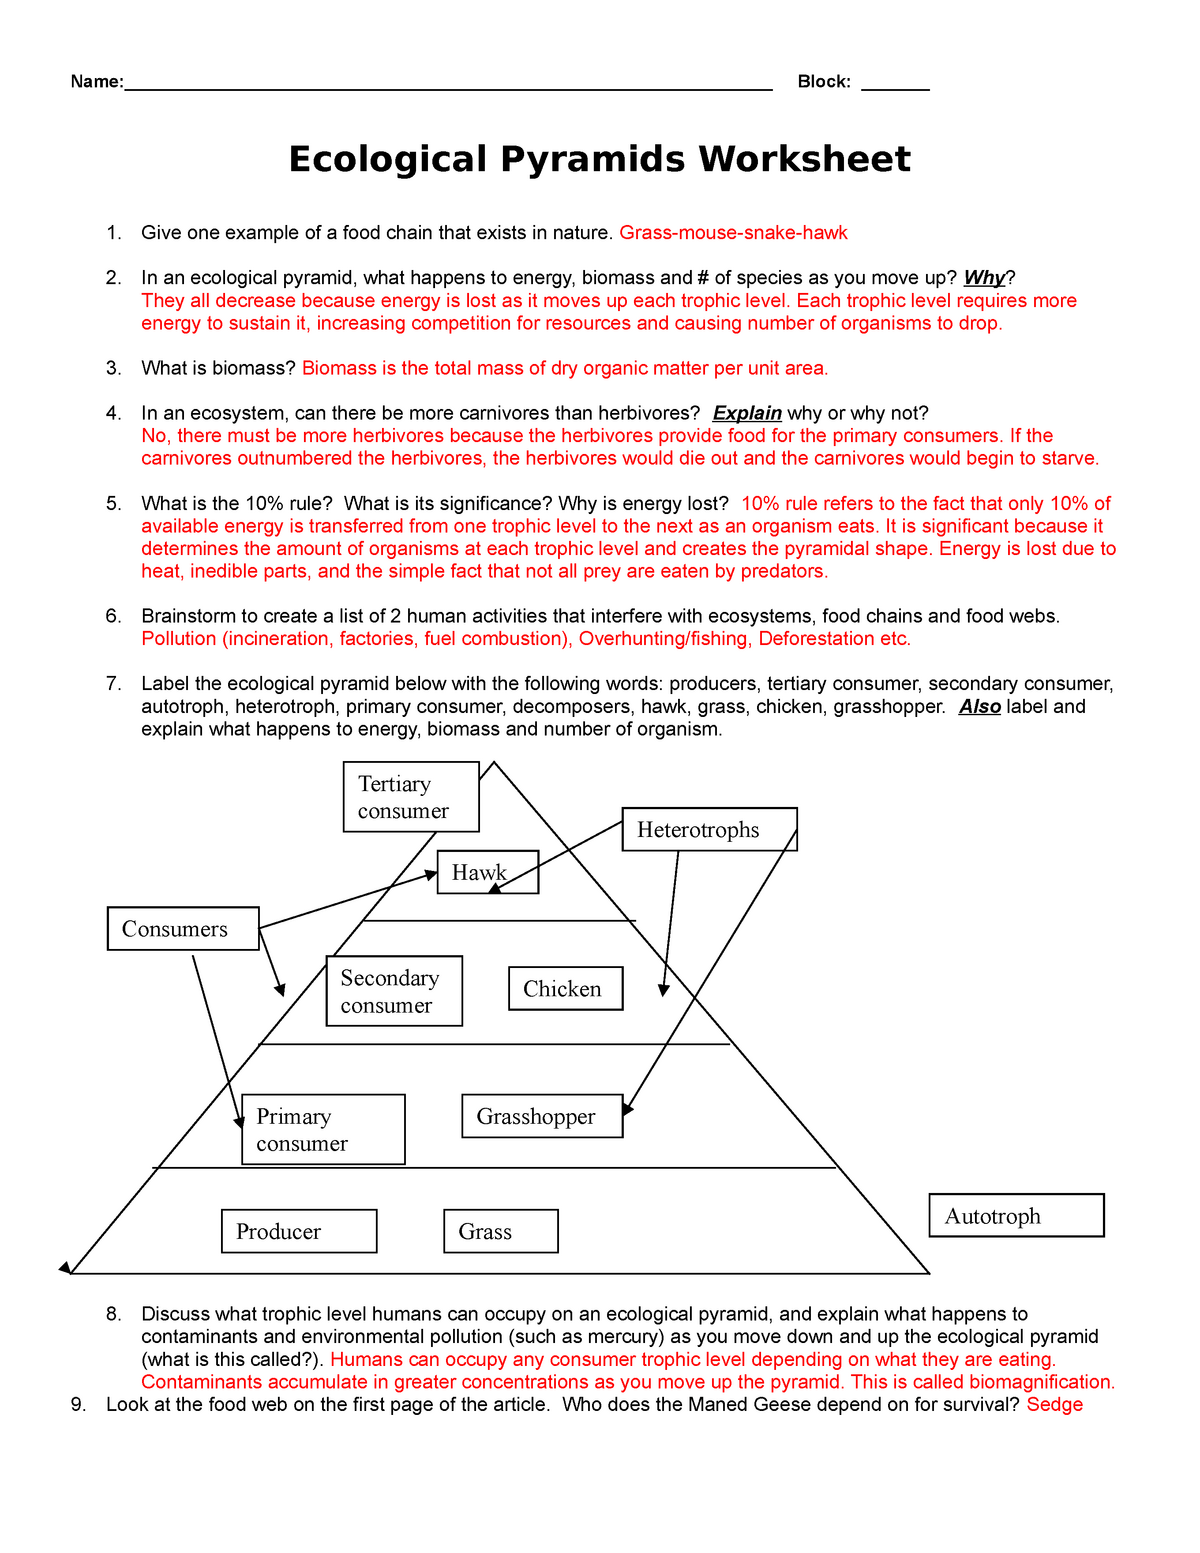 KEY ecological-pyramids-worksheet 22 - LIFESCI 22P022 - McMaster With Regard To Ecological Pyramids Worksheet Answers